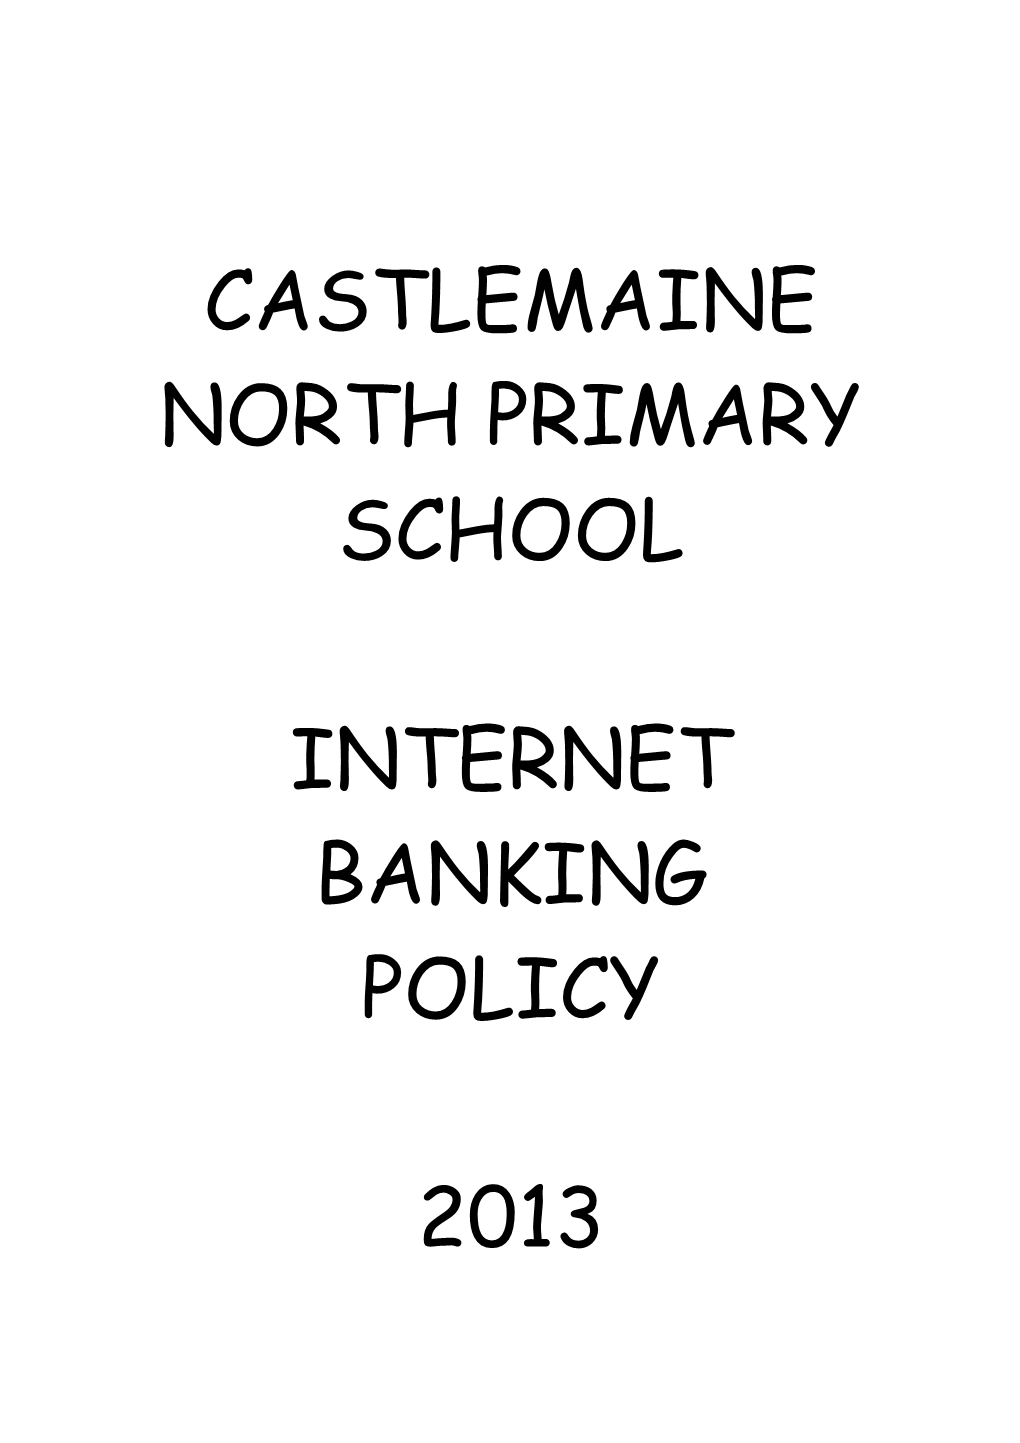 Castlemaine North Primary School